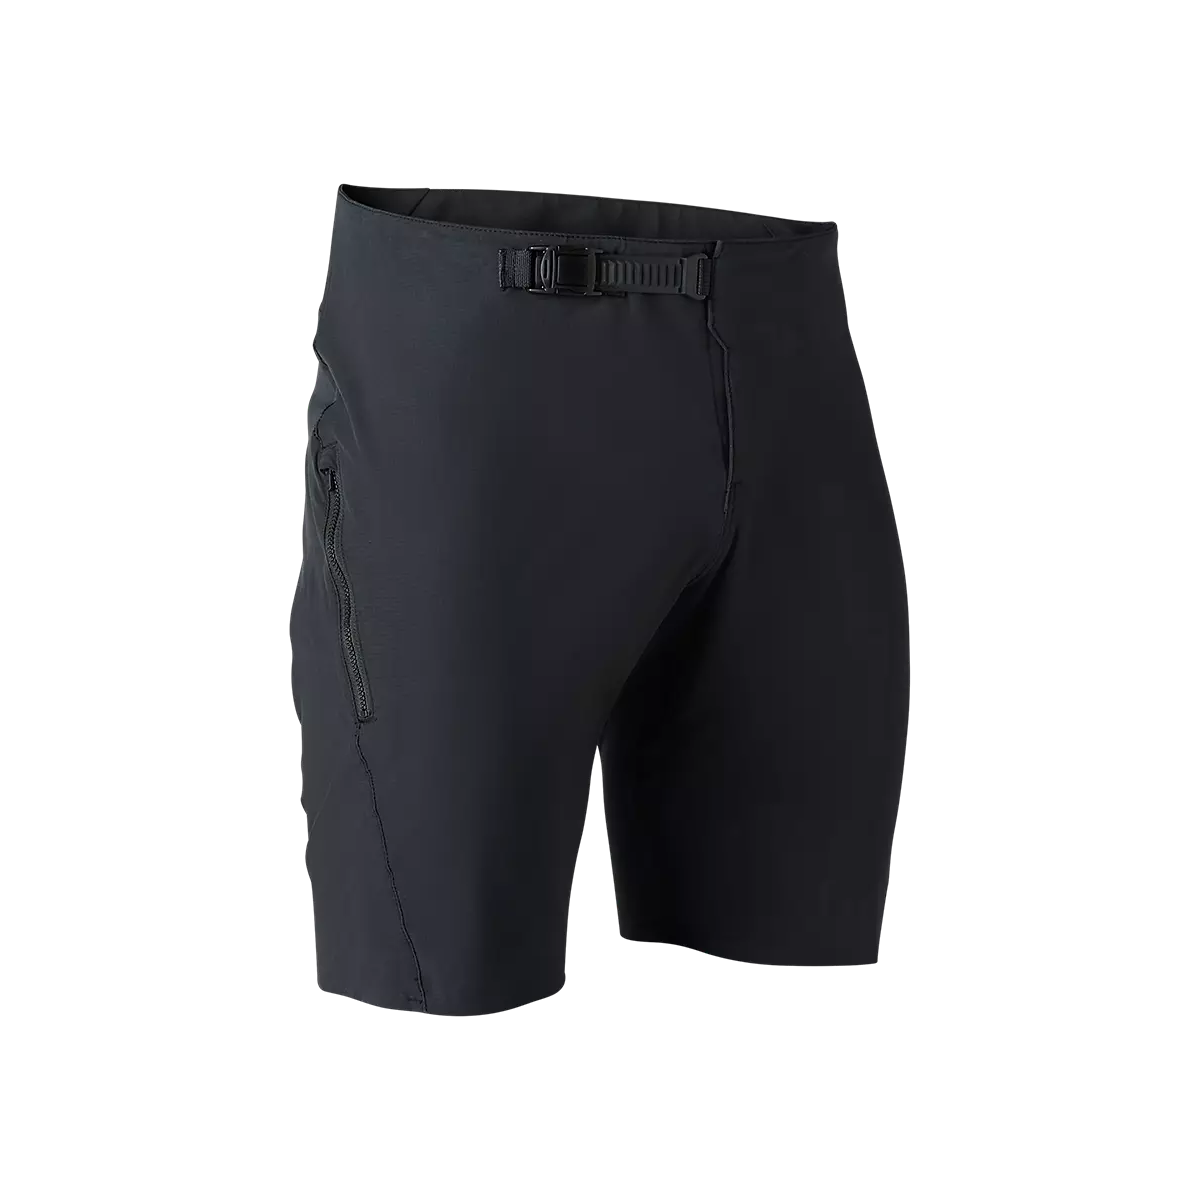 Pantalón corto Fox Flexair Ascent en color negro sin badana extraible 31019-001